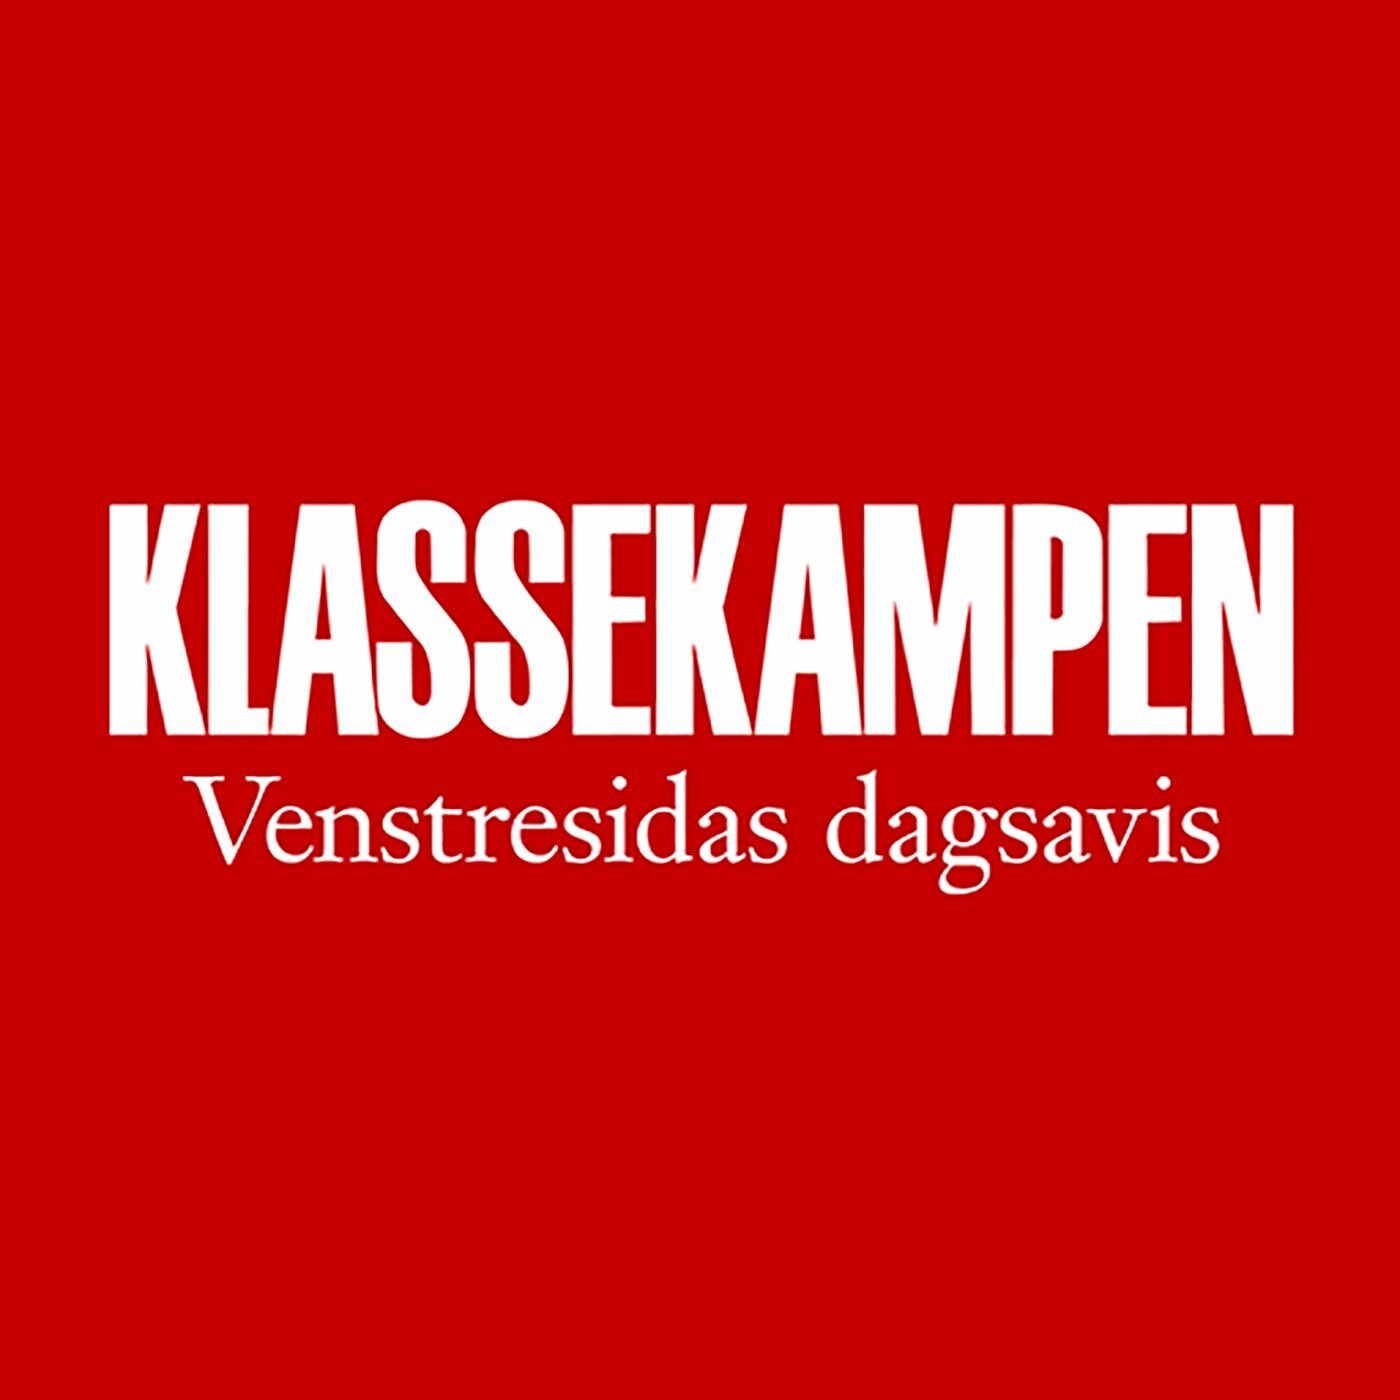 Featured in “Krisa Fratar Folk Frihet (The Crisis Deprives People of Freedom),” Klassekampen. November 15, 2013